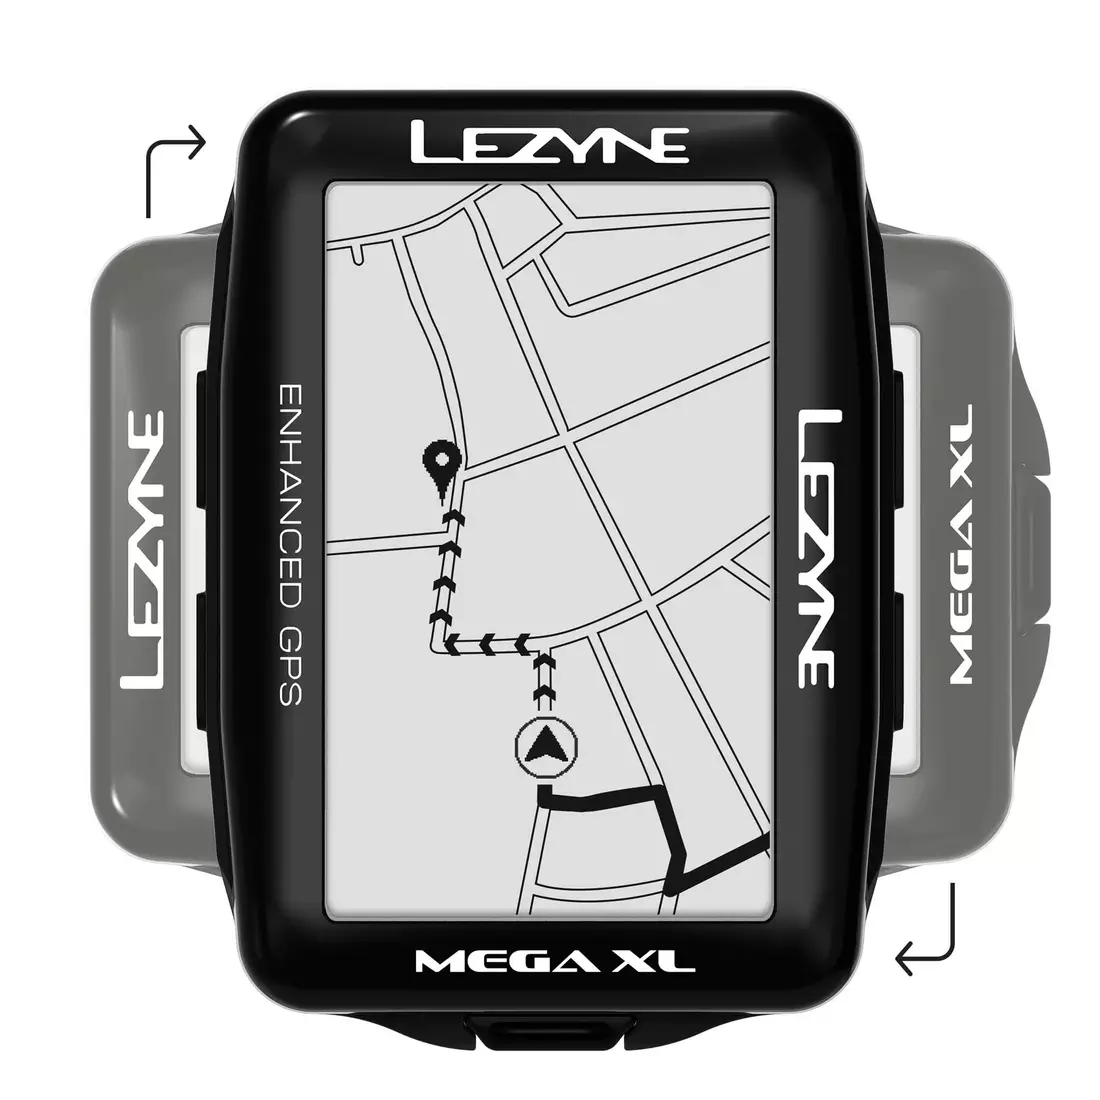 LEZYNE MEGA XL GPS HRSC Loaded, bike computer